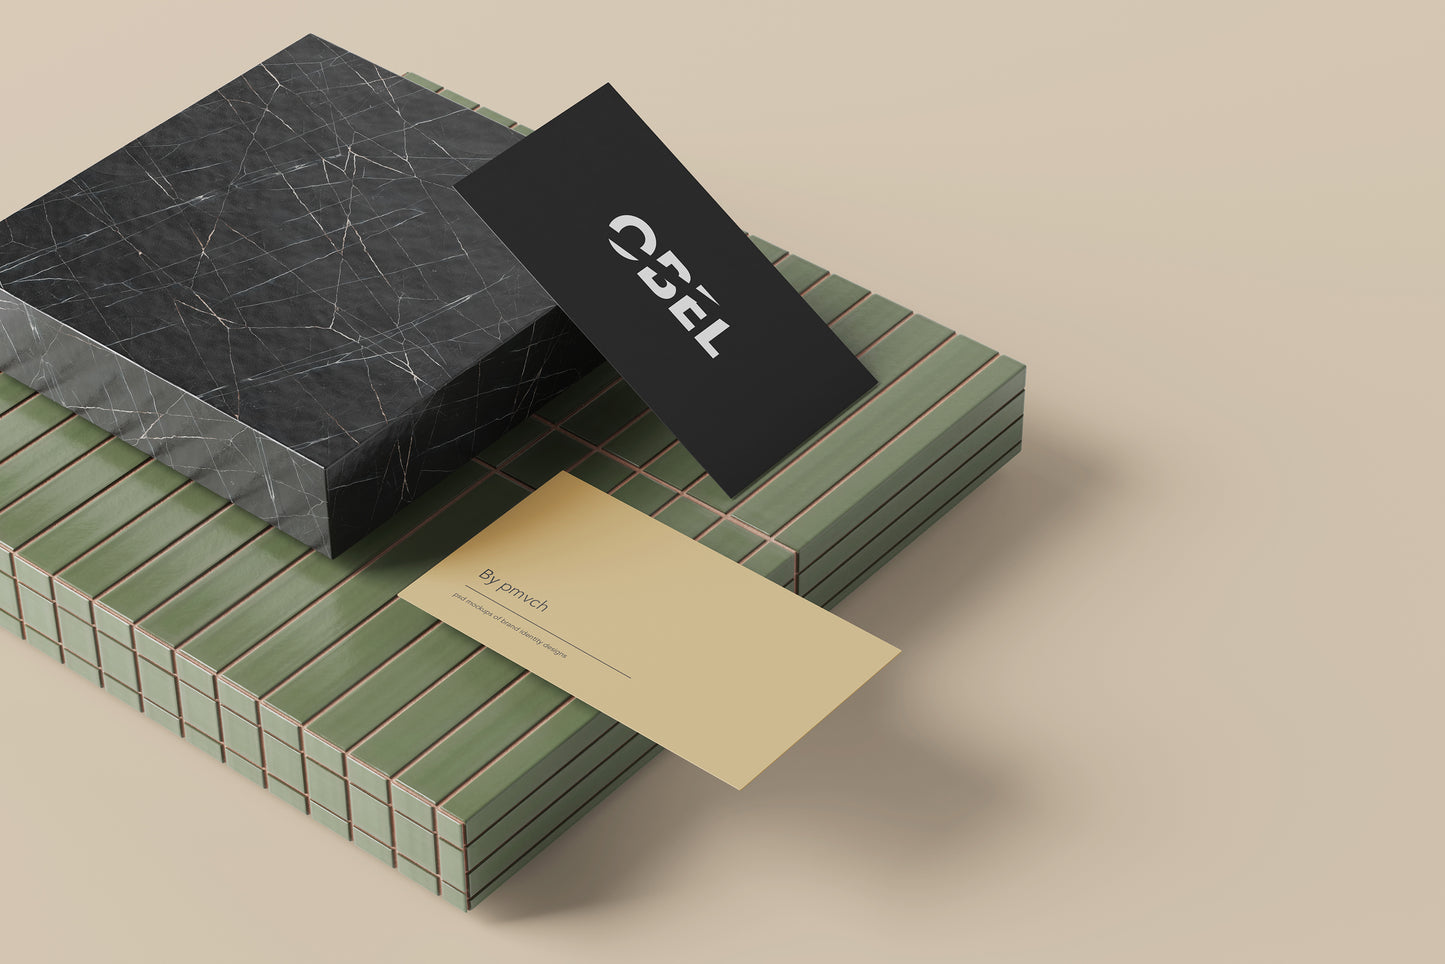 Obel - An Elegant branding identity mockups set